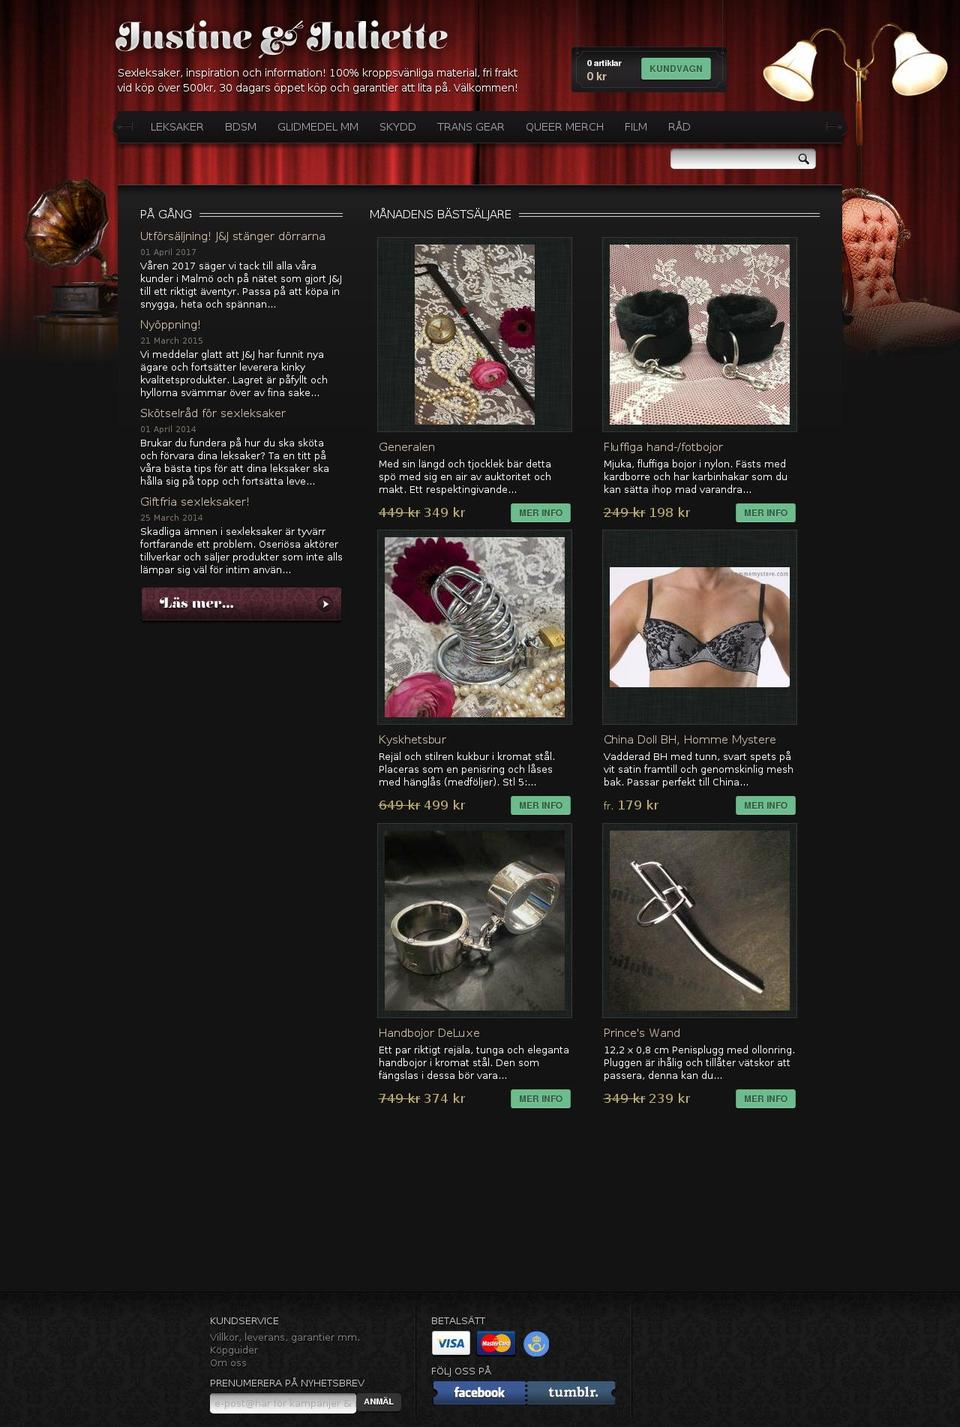 justinejuliette.se shopify website screenshot